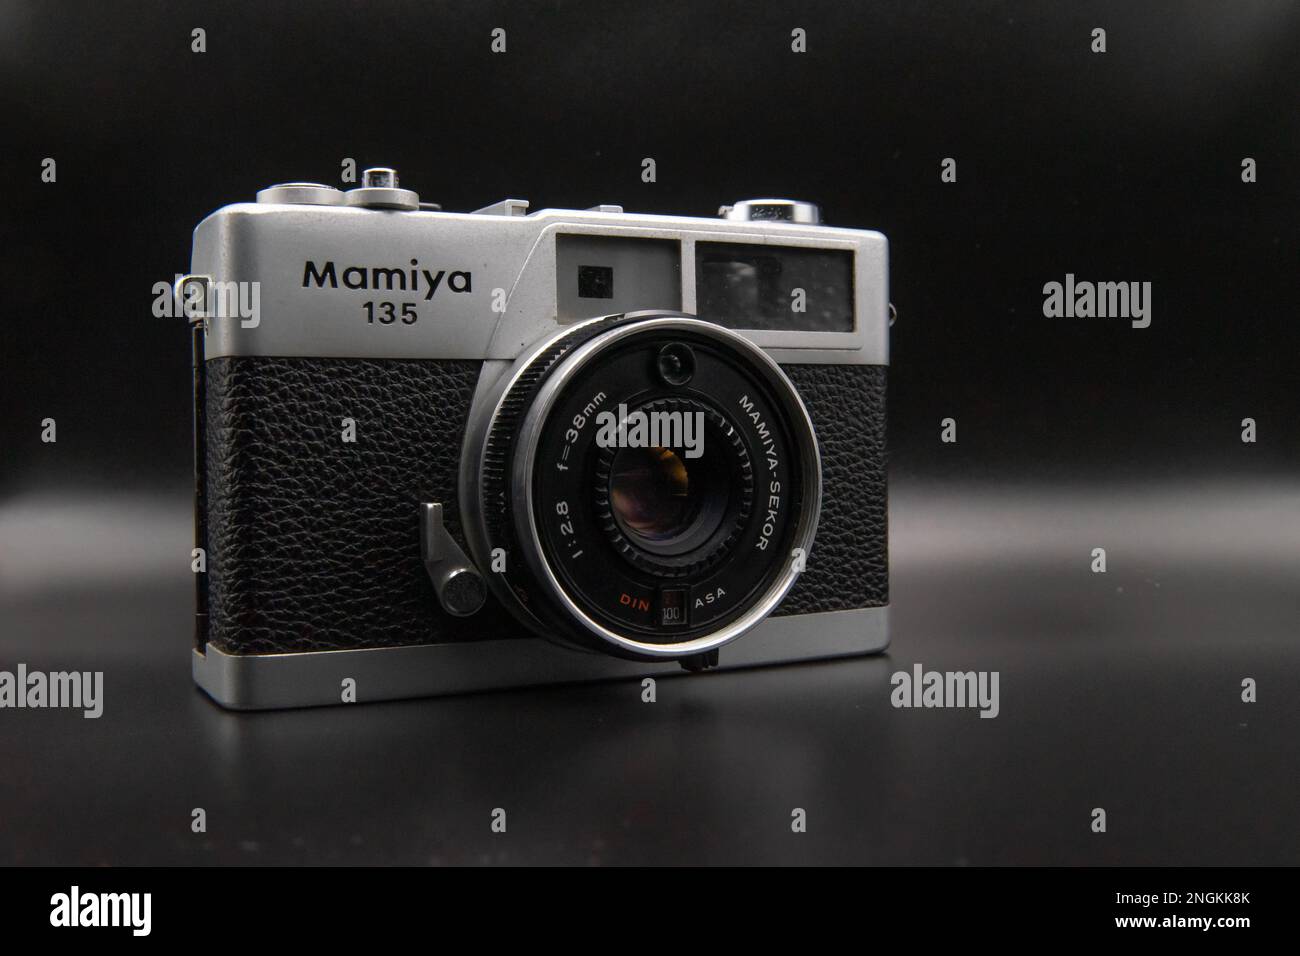 Closeup shot of Mamiya 135 EE rangefinder camera with Mamiya Sekkor 38mm lens on black background Stock Photo